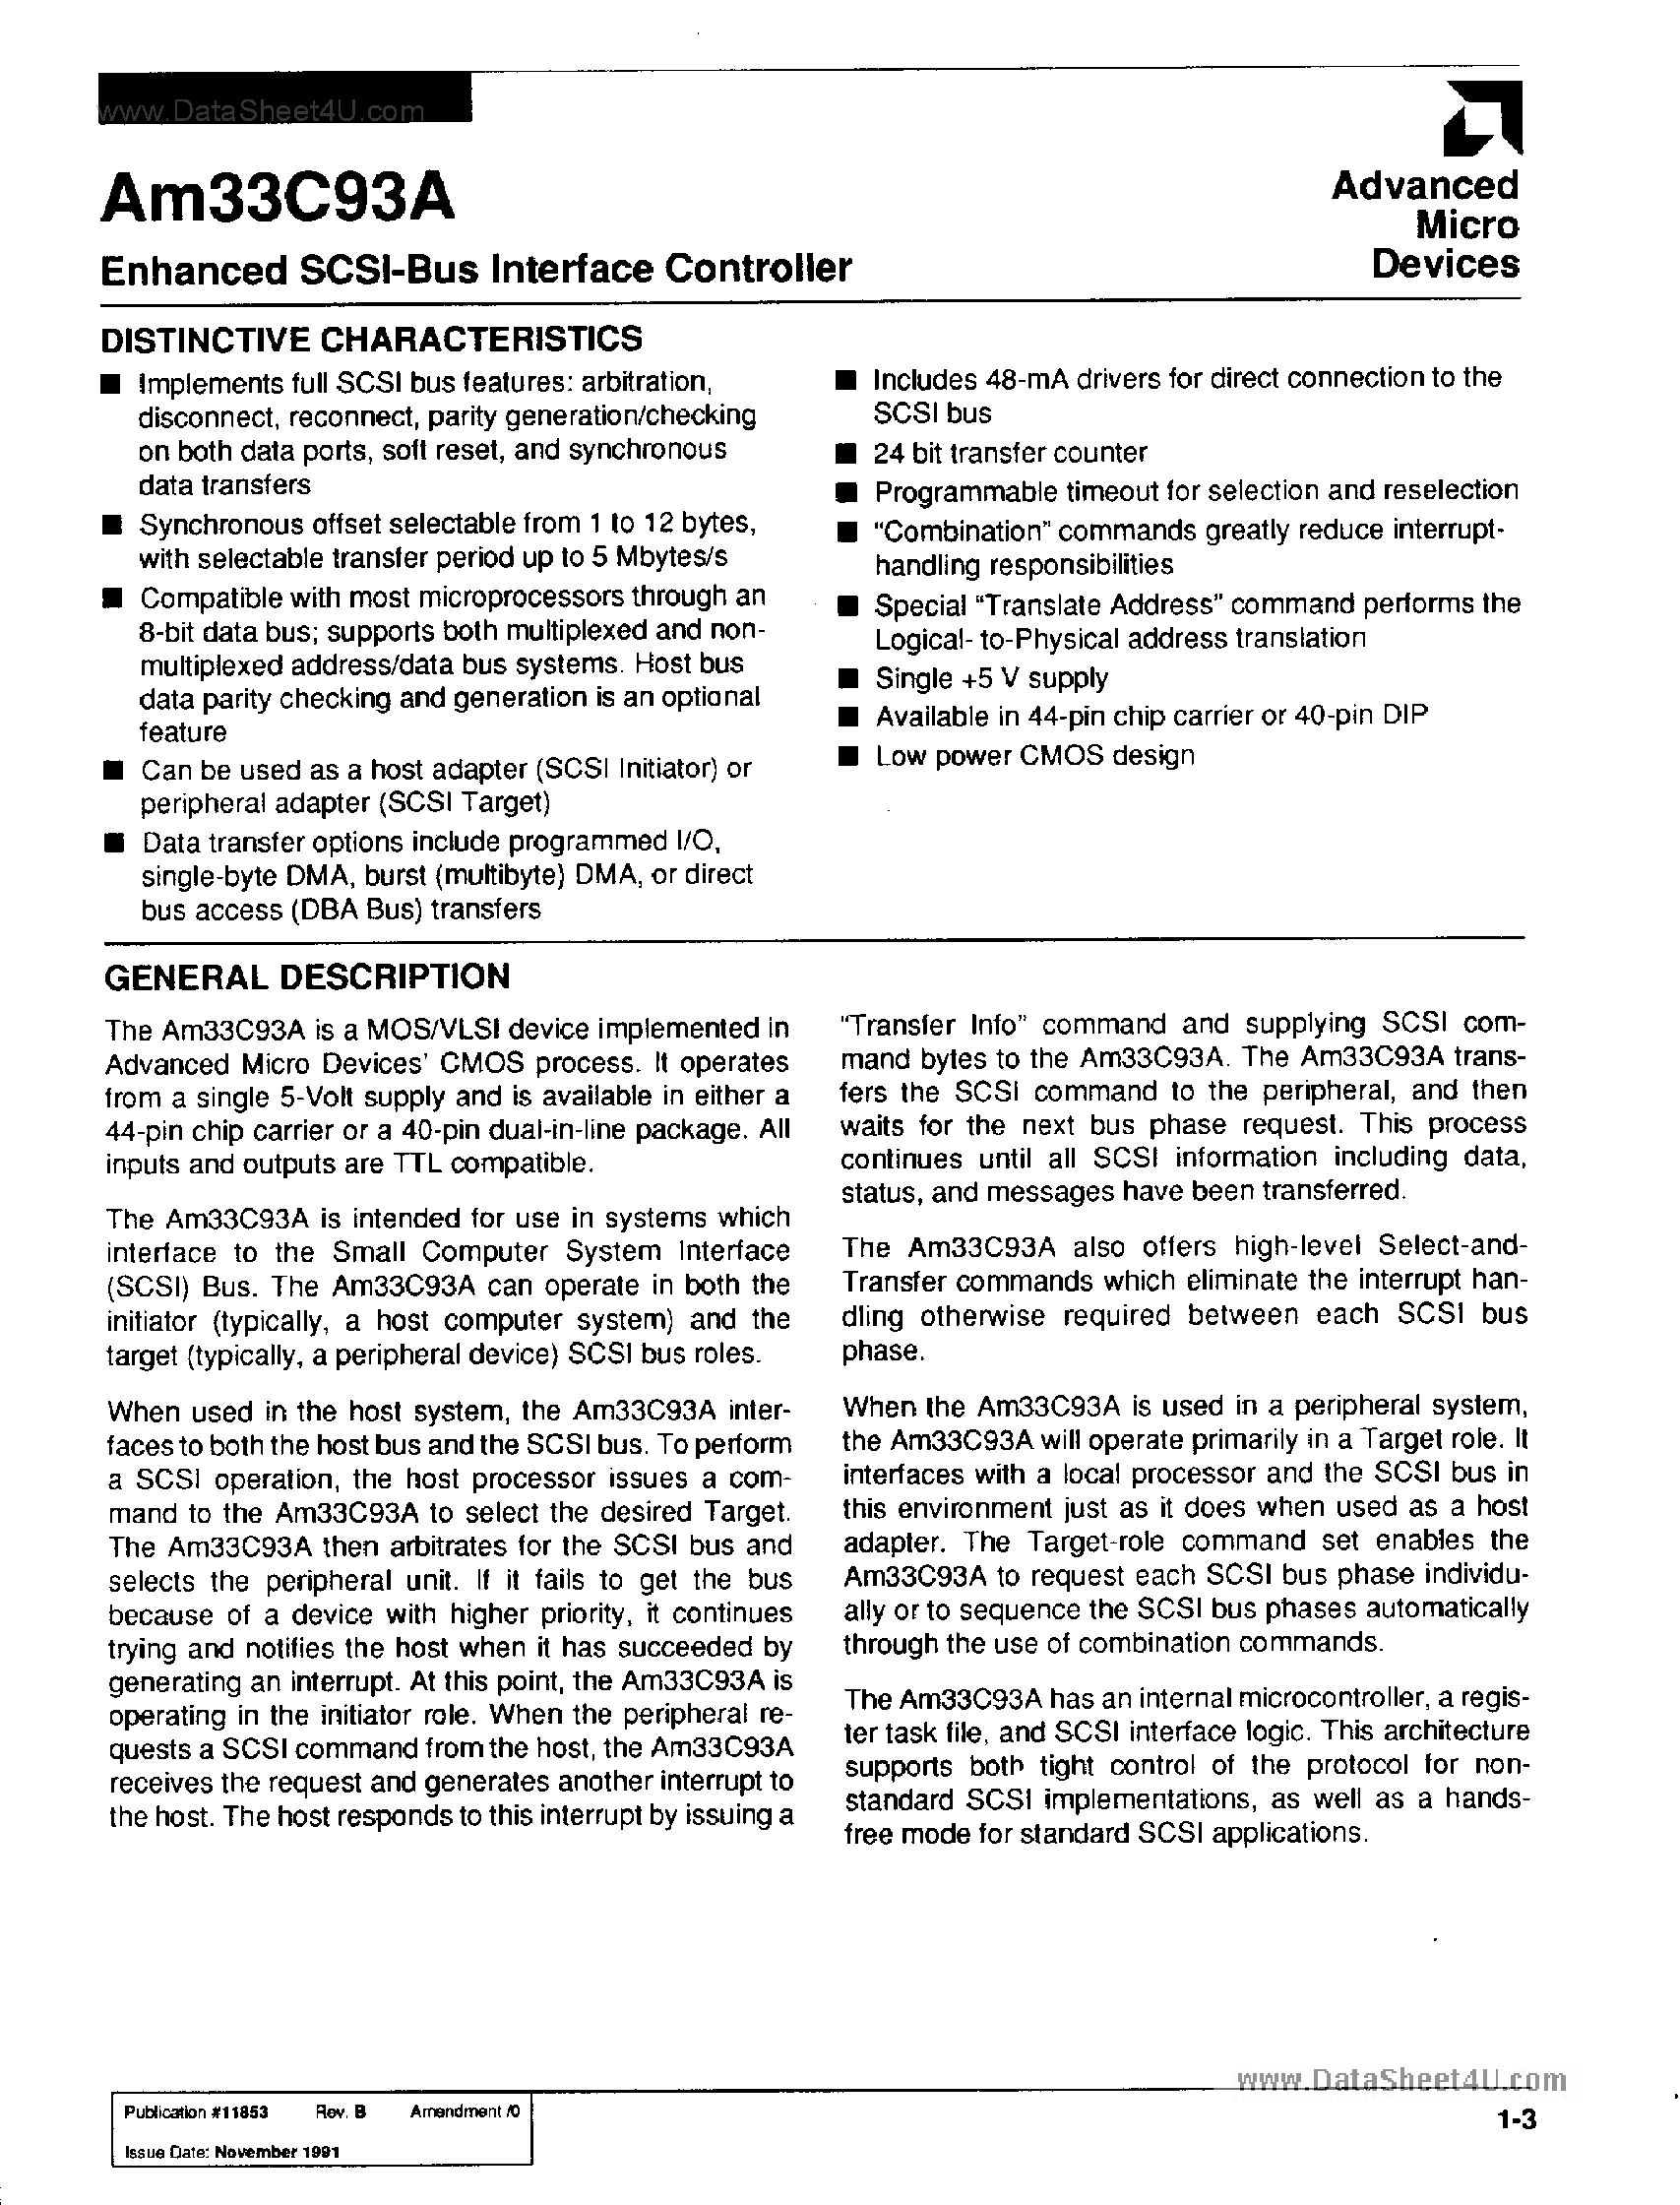 Даташит AM33C93A - ENHANCED SCSI BUS INTERFACE CONTROLLER страница 1